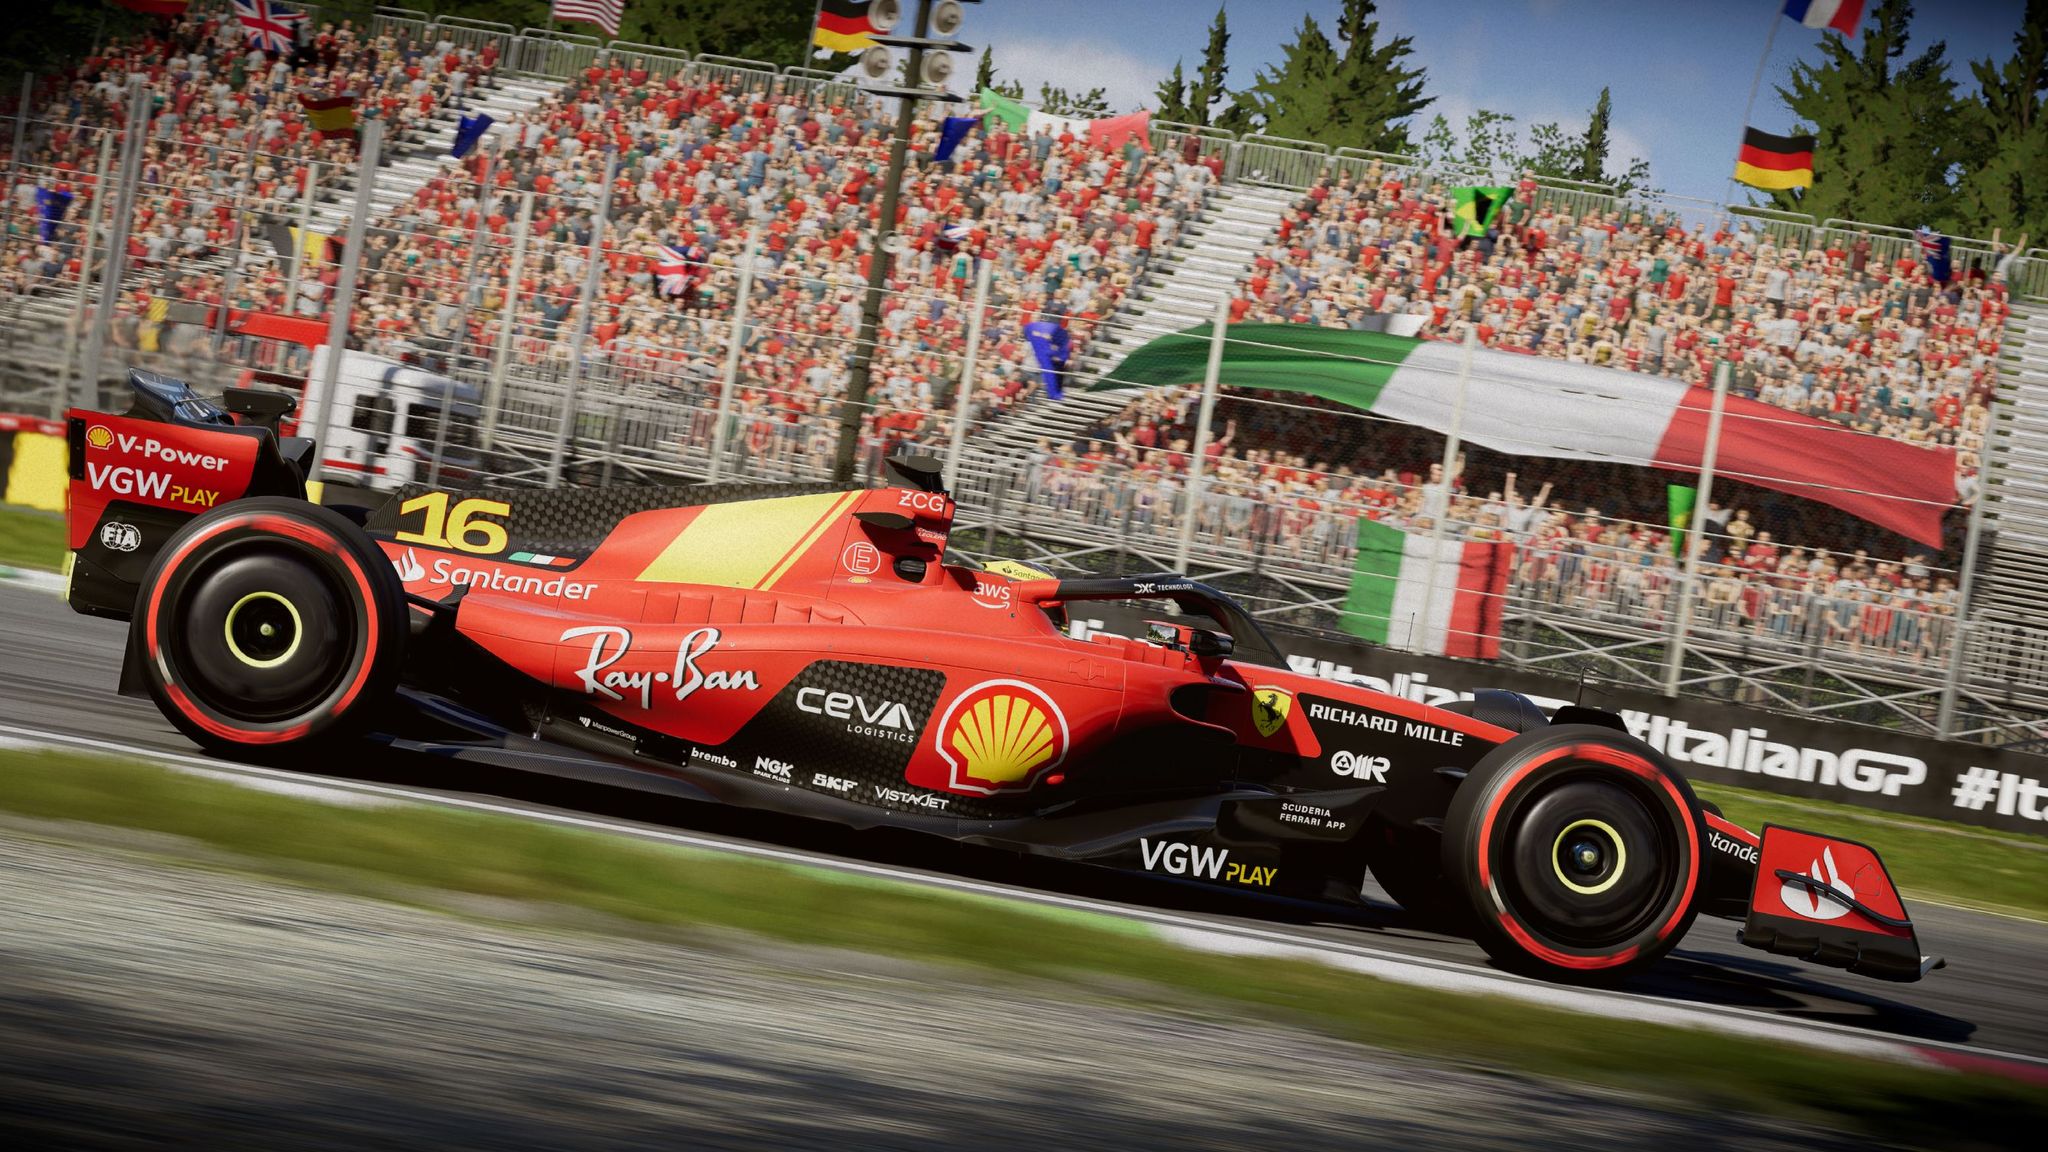 Italian Grand Prix Ferrari release special livery ahead of home F1 race at Monza F1 News